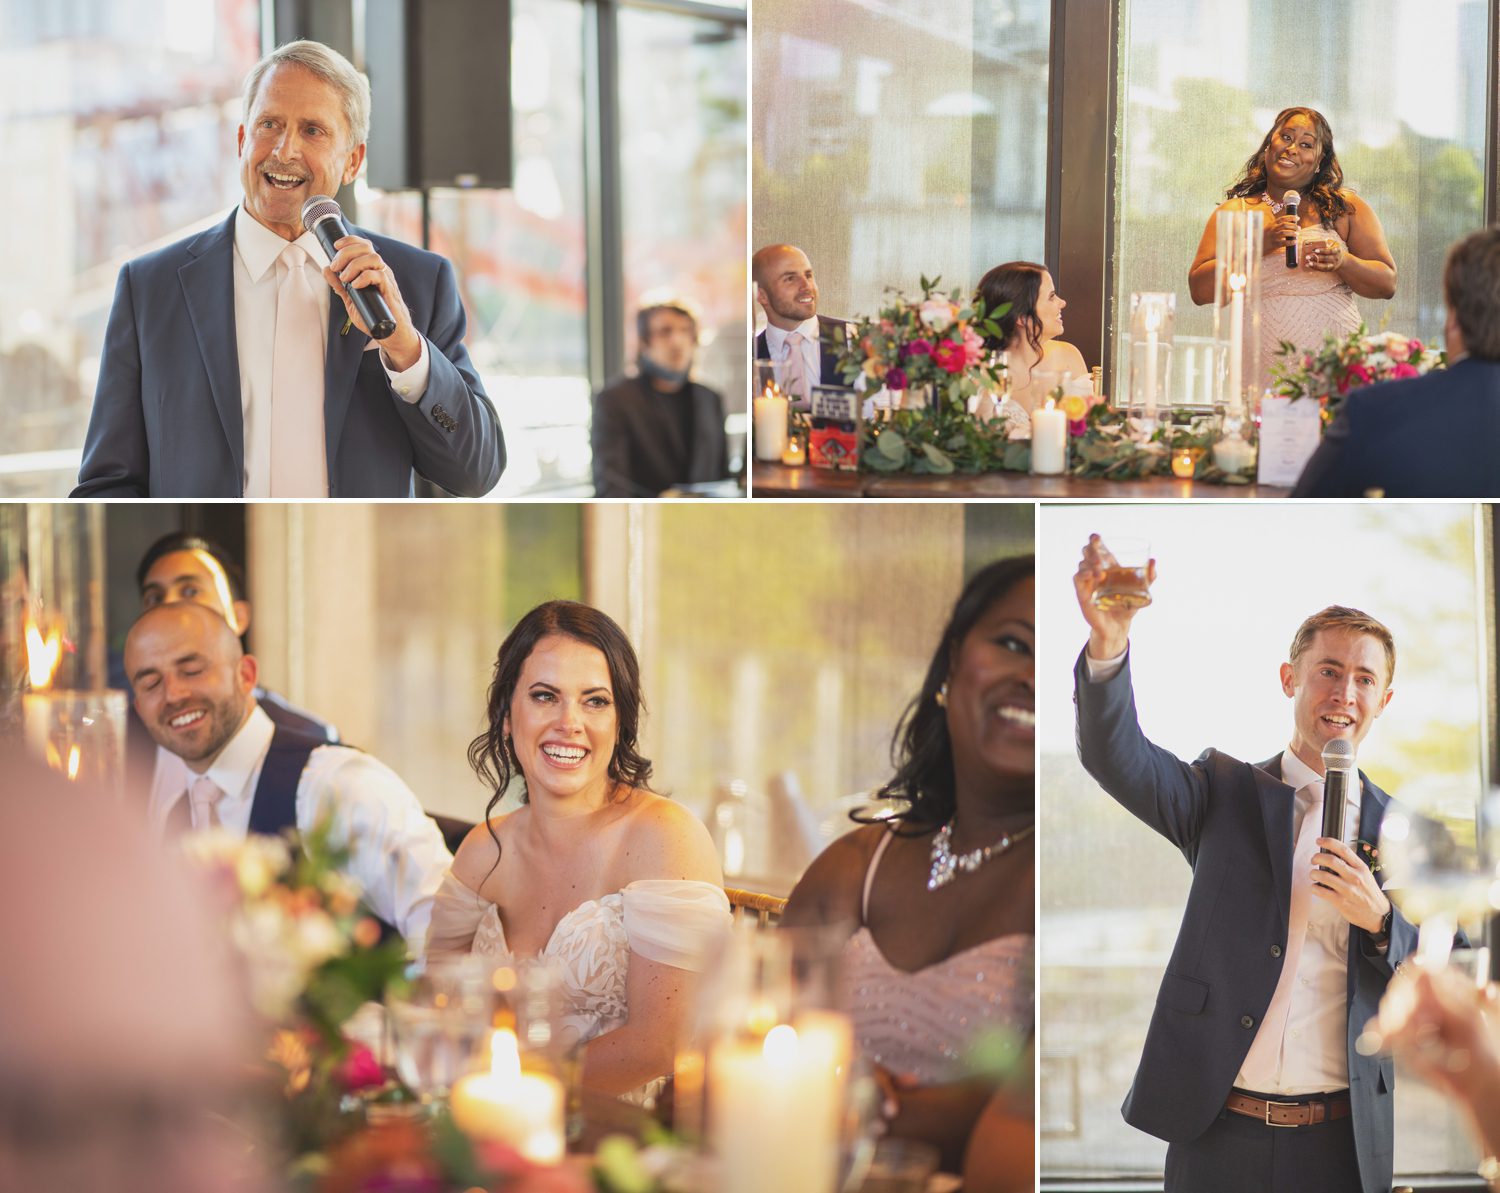 The Bridge Building Event Spaces Downtown Nashville, TN Wedding Reception Toasts